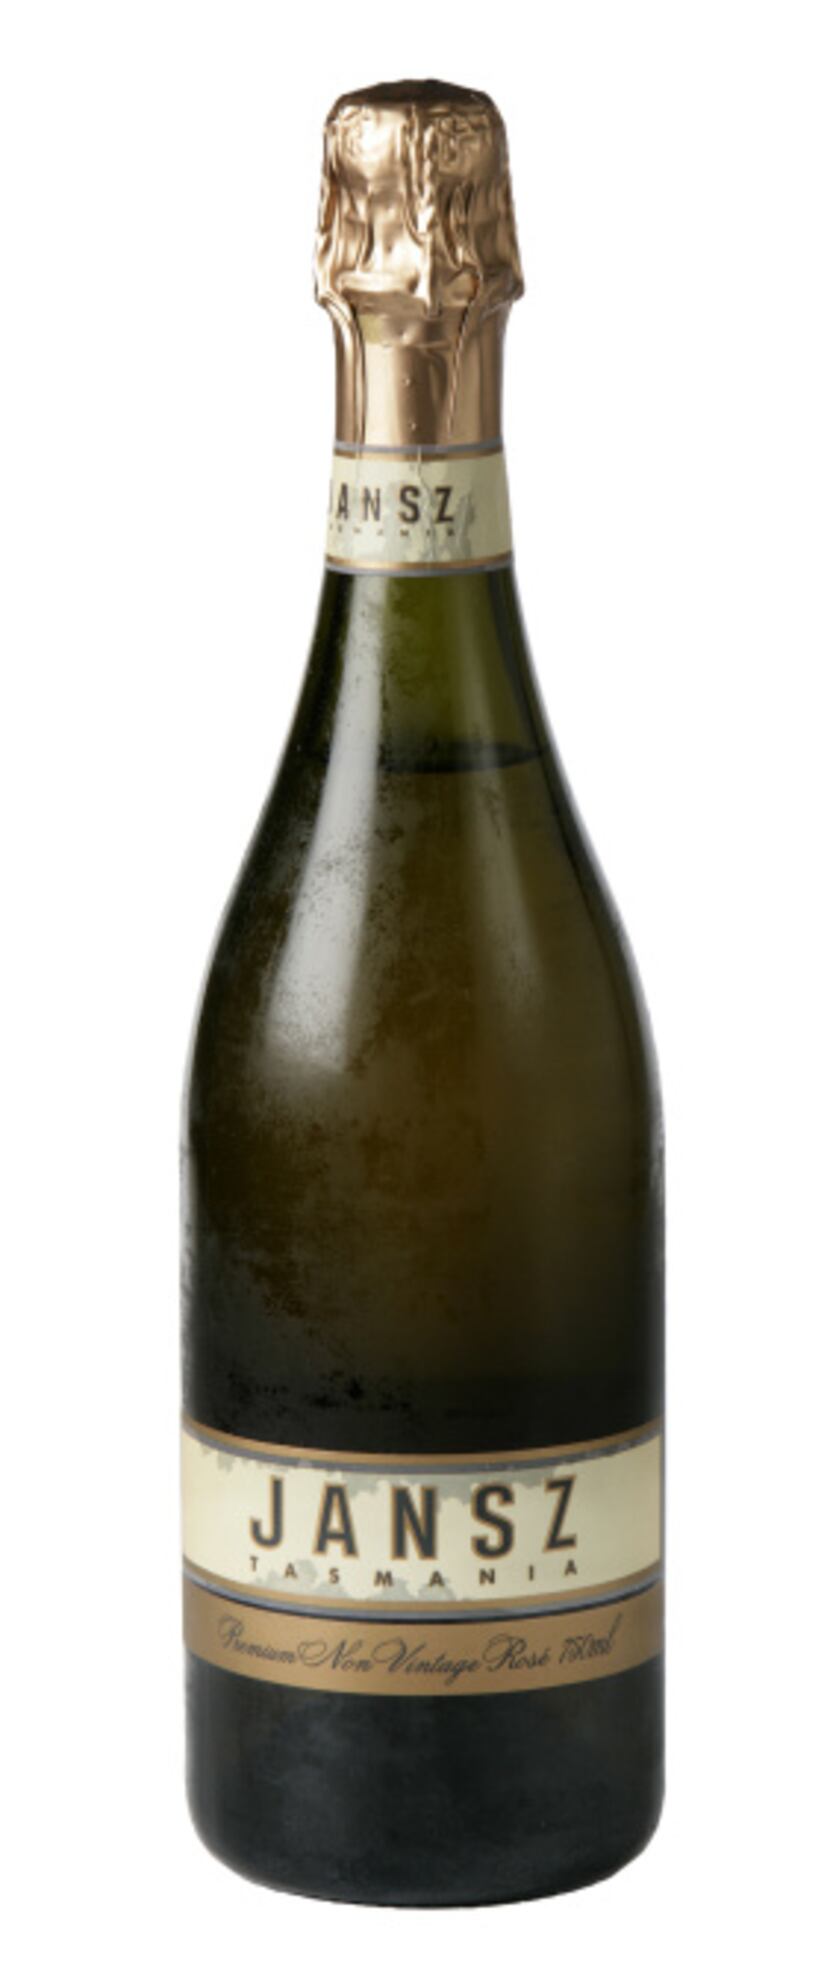 Jansz Premium Non-Vintage Rosé, Tasmania. $20.89; Spec’s and Las Colinas Beverages